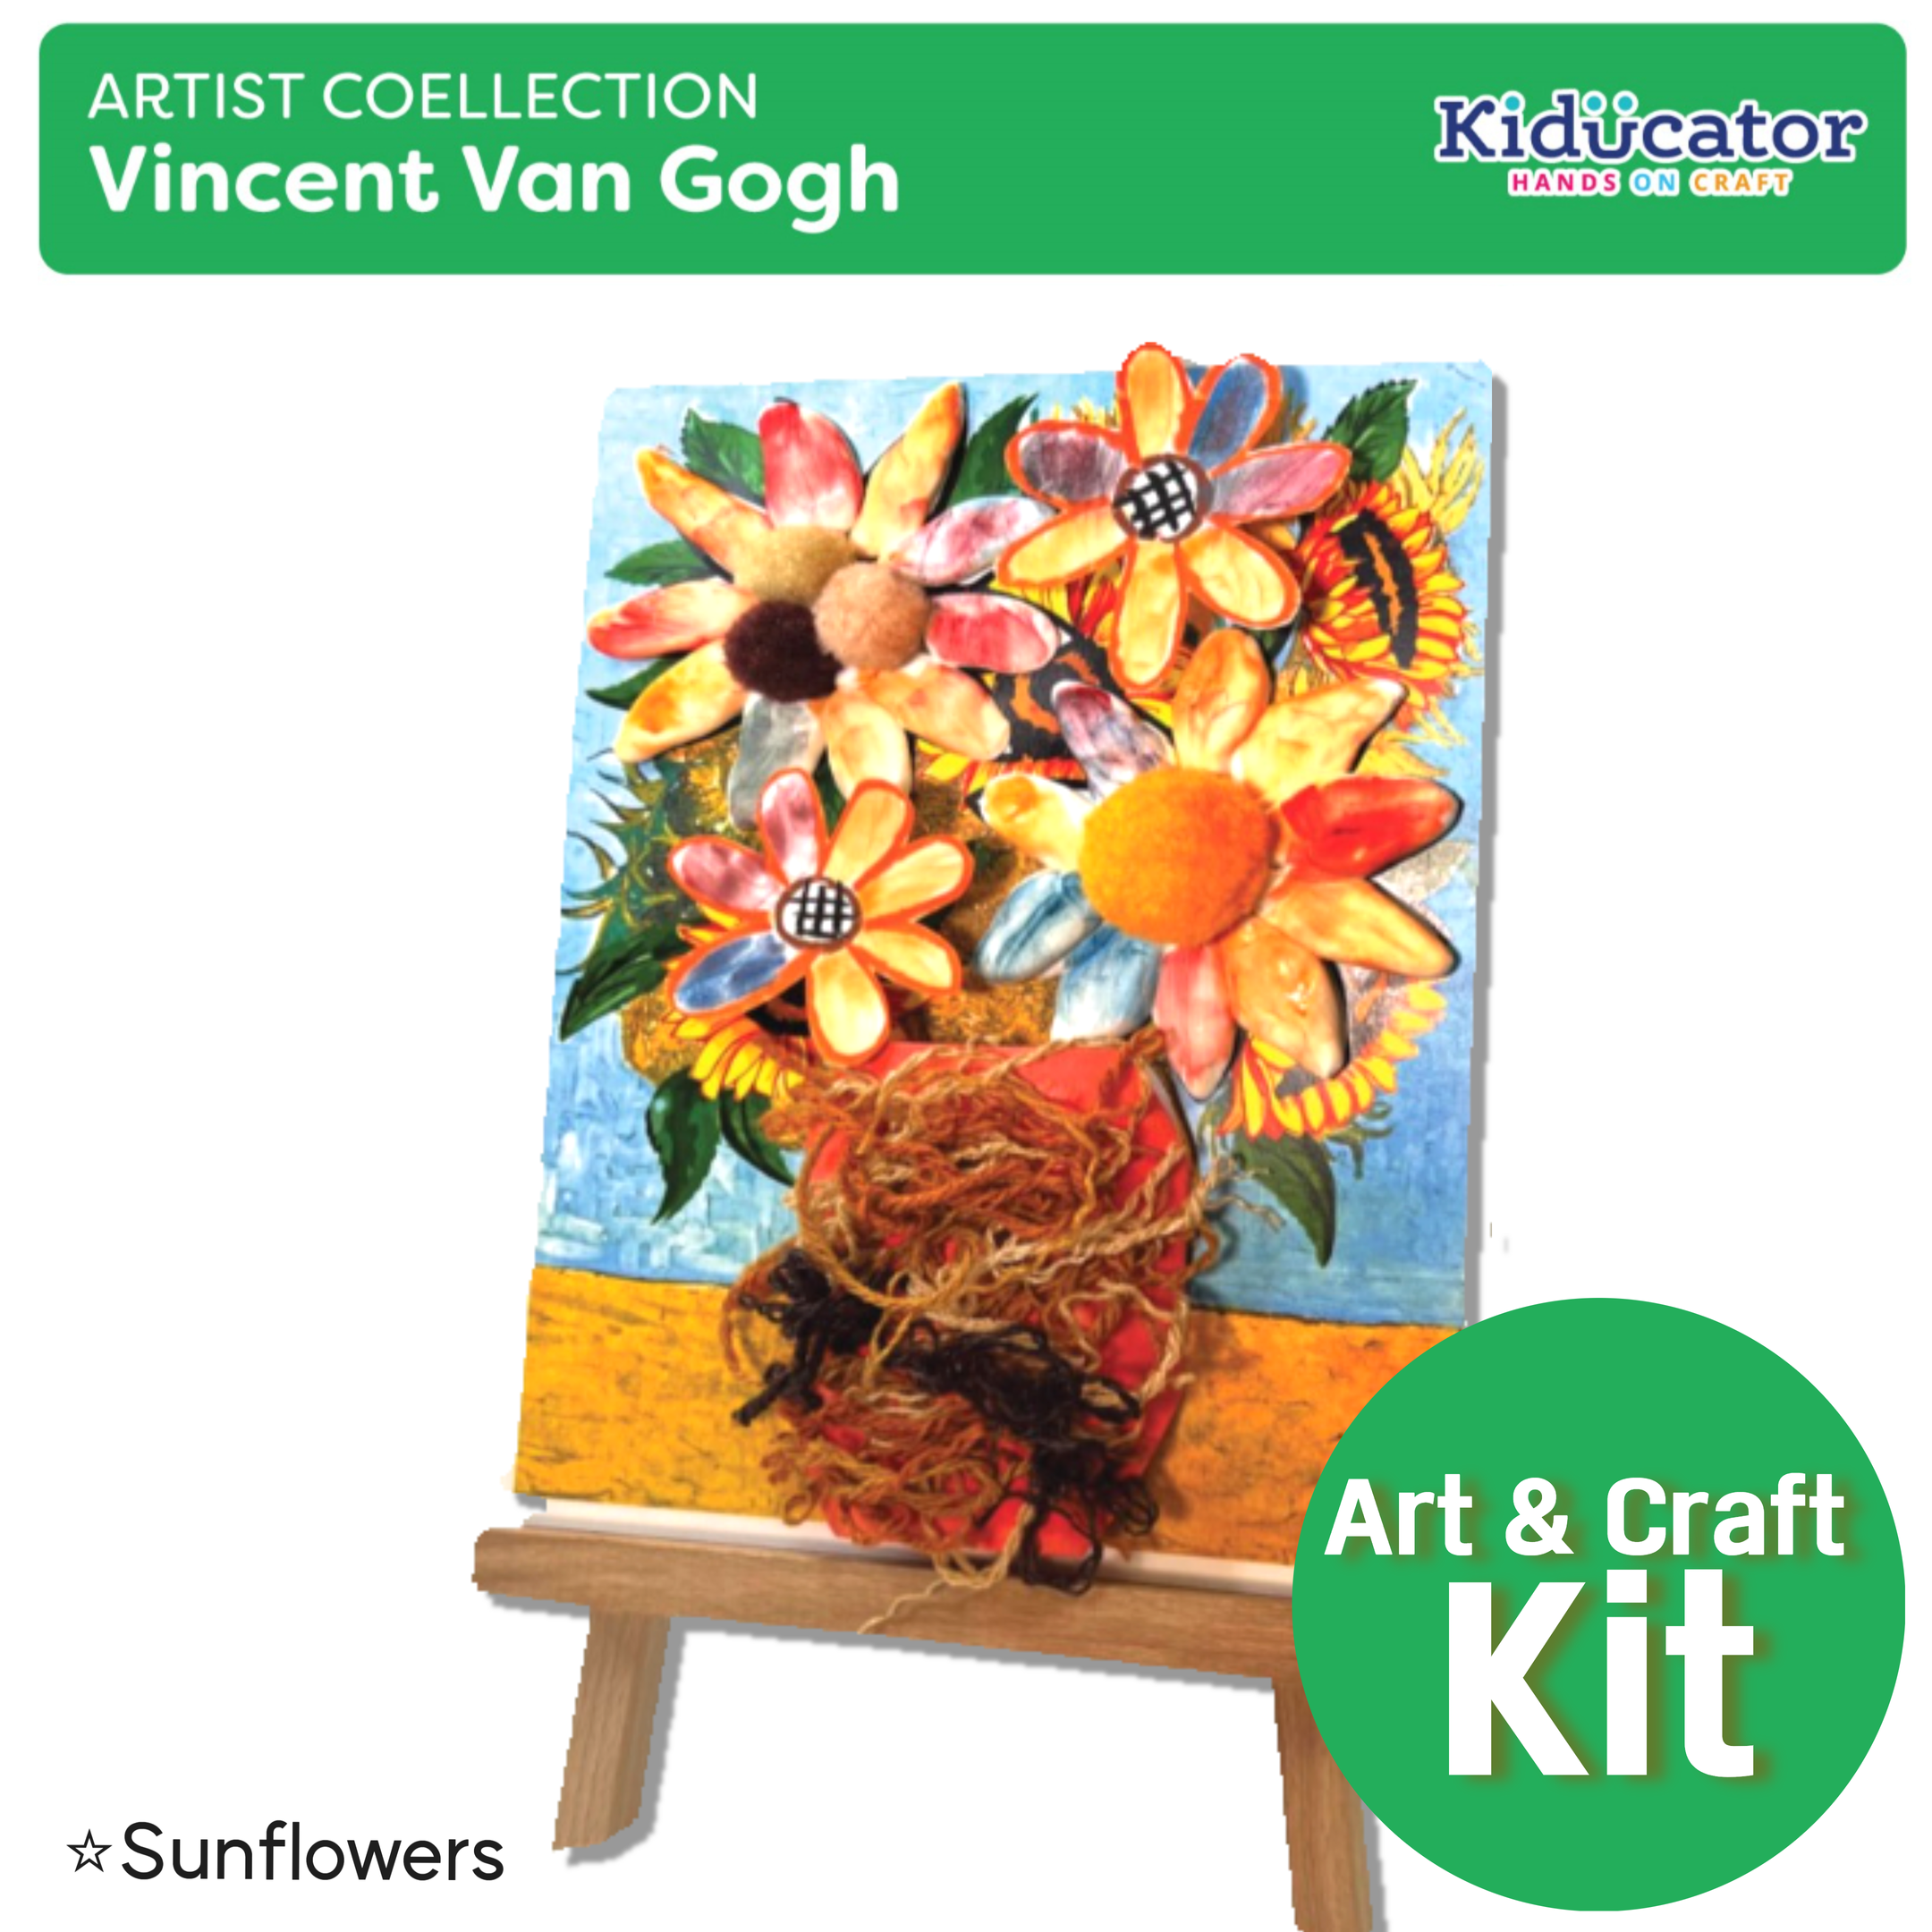 🌻Van Gogh Art & Craft Kit - Museum Artist Collection 🎨